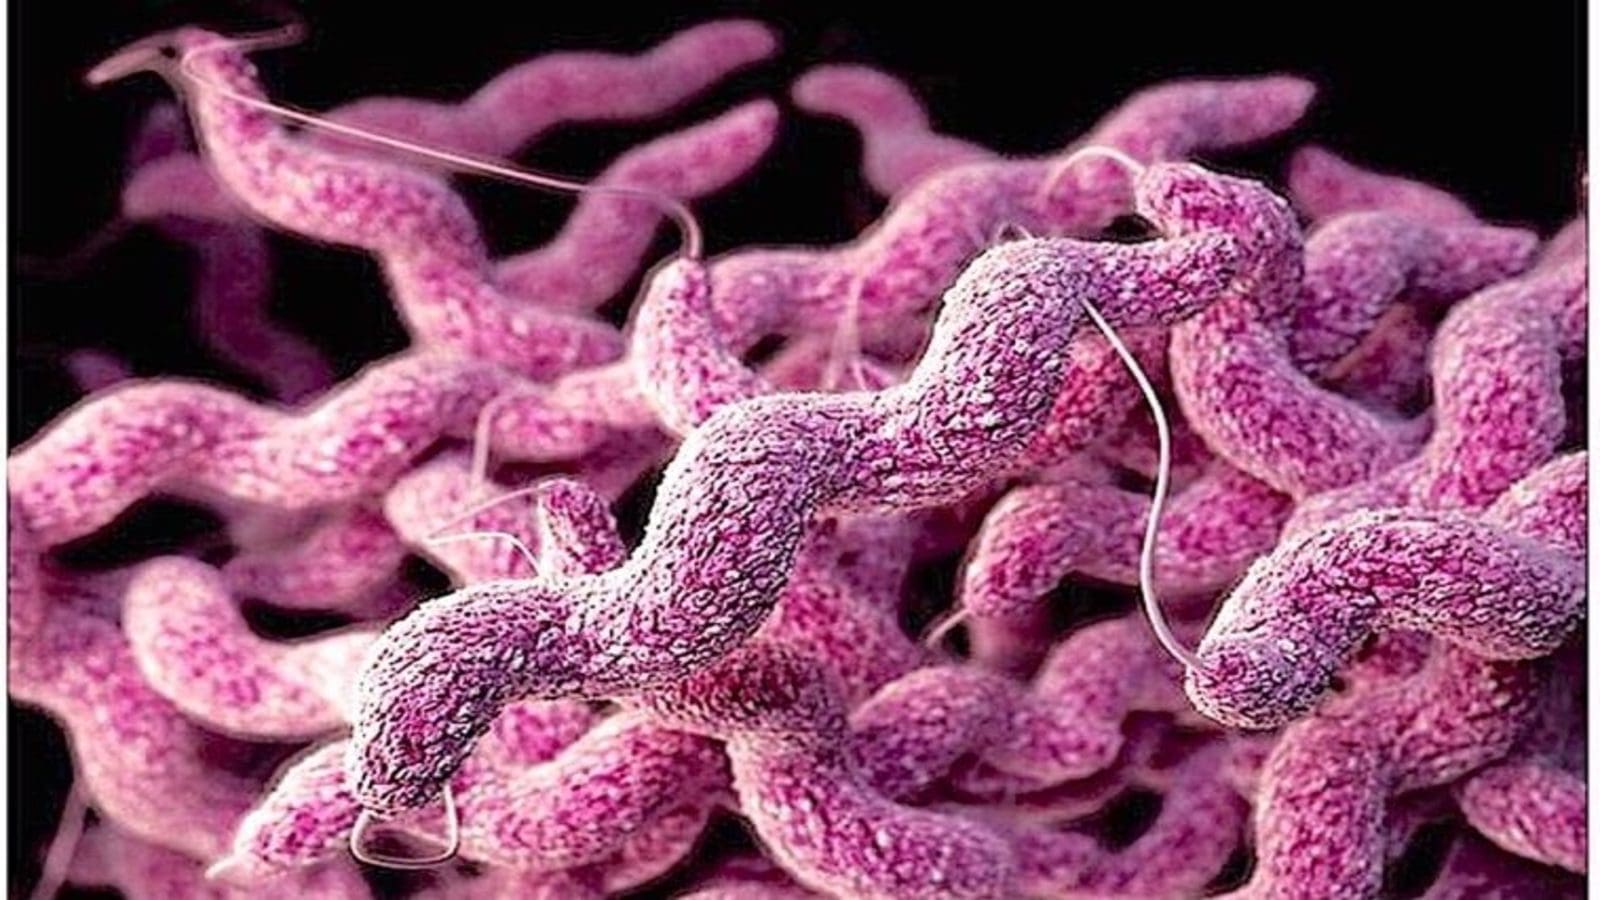 Foodborne illness outbreak data identifies 4183 outbreaks